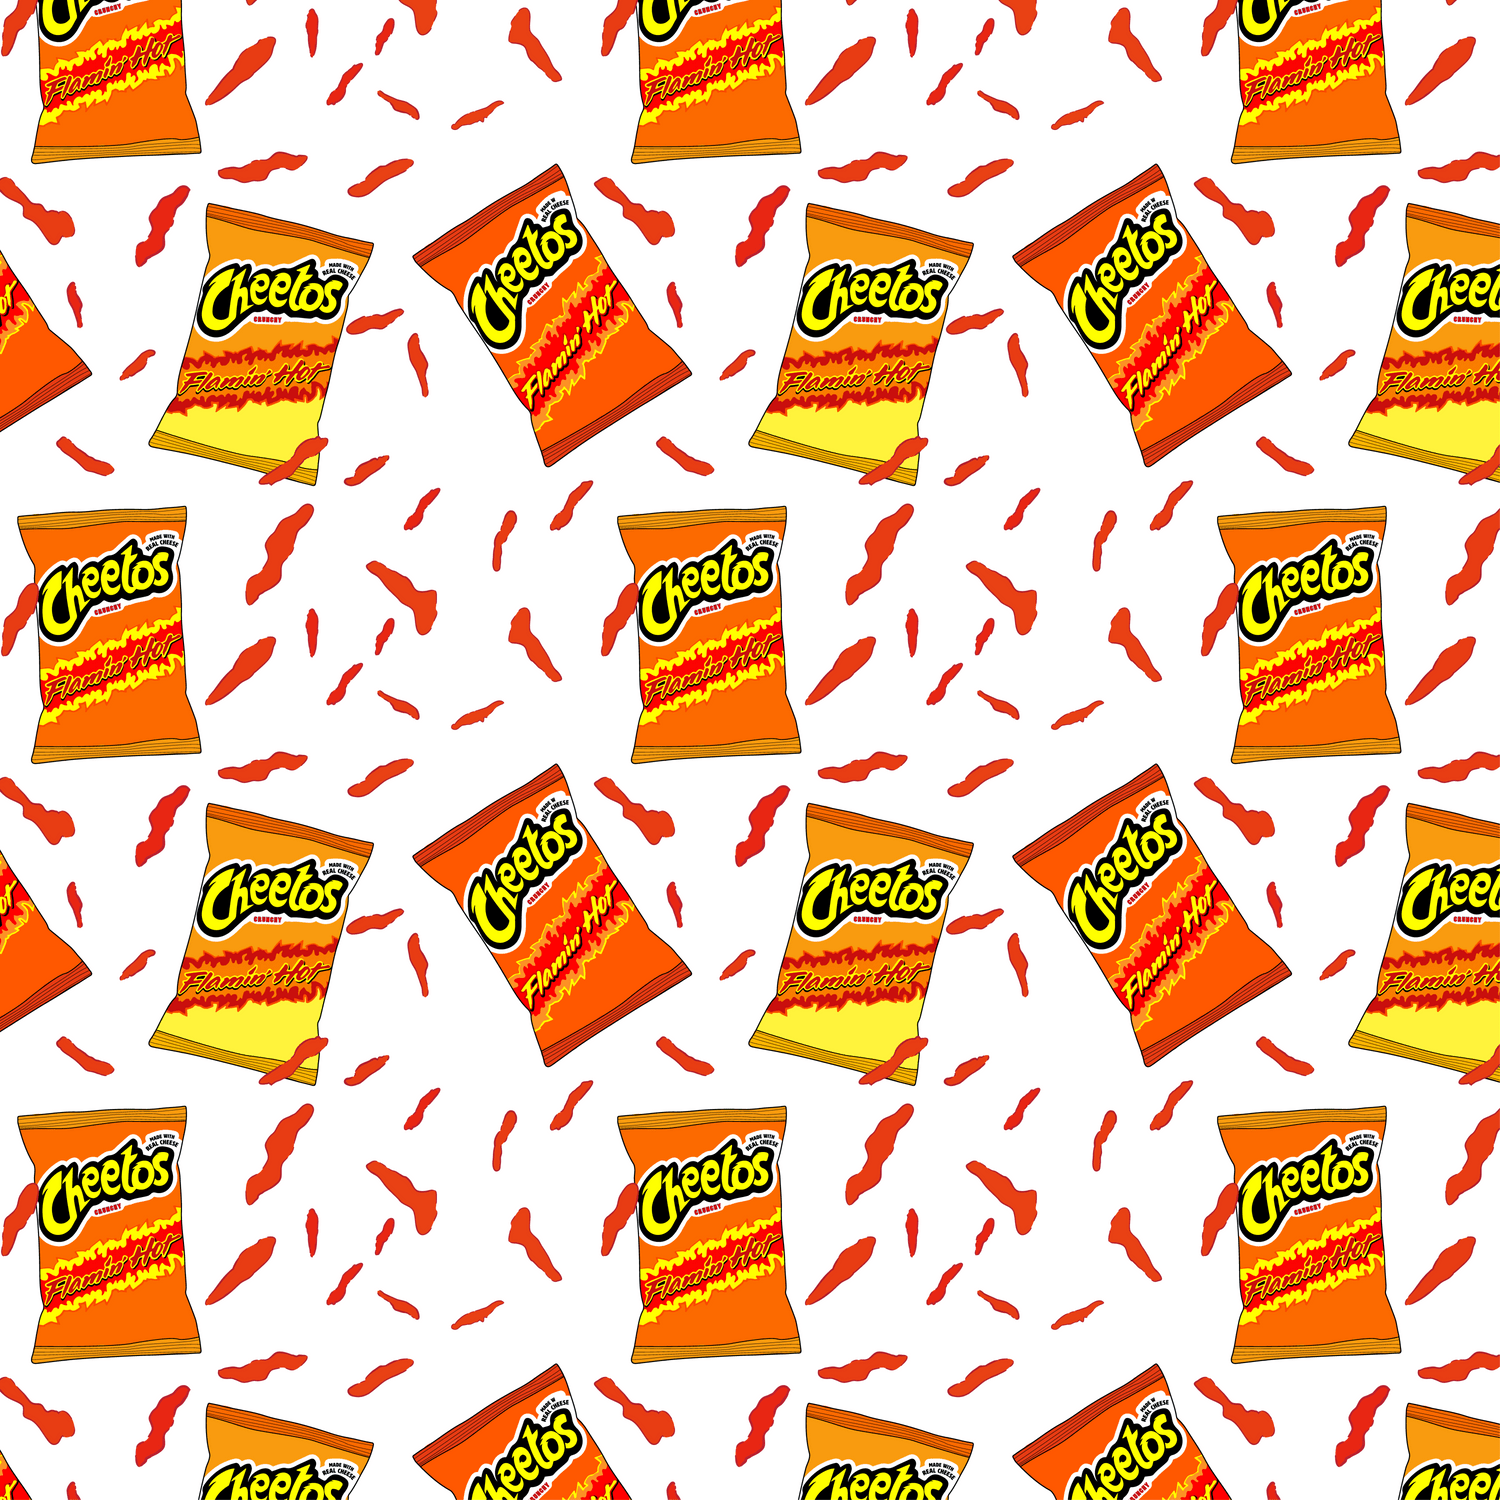 Hot Cheetos Wallpapers Top Free Hot Cheetos Backgrounds Wallpaperaccess